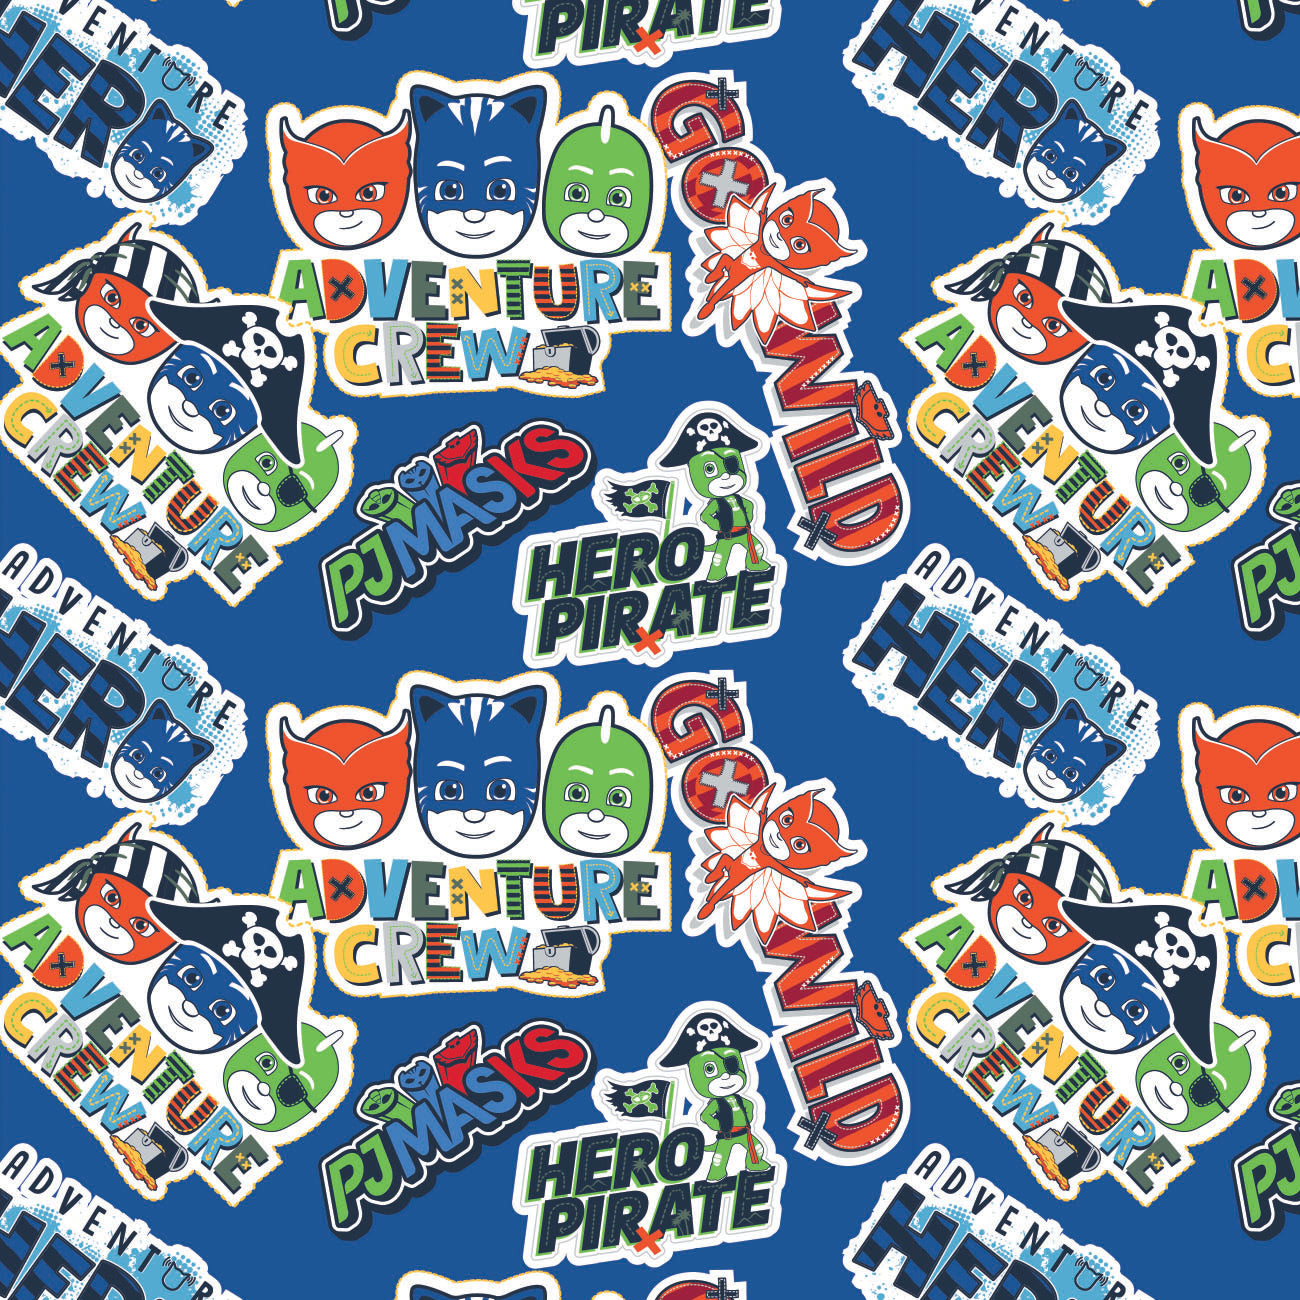 PJ Masks Adventure Heroes Collection - Adventure Crew - Blue - Cotton 95240108-01